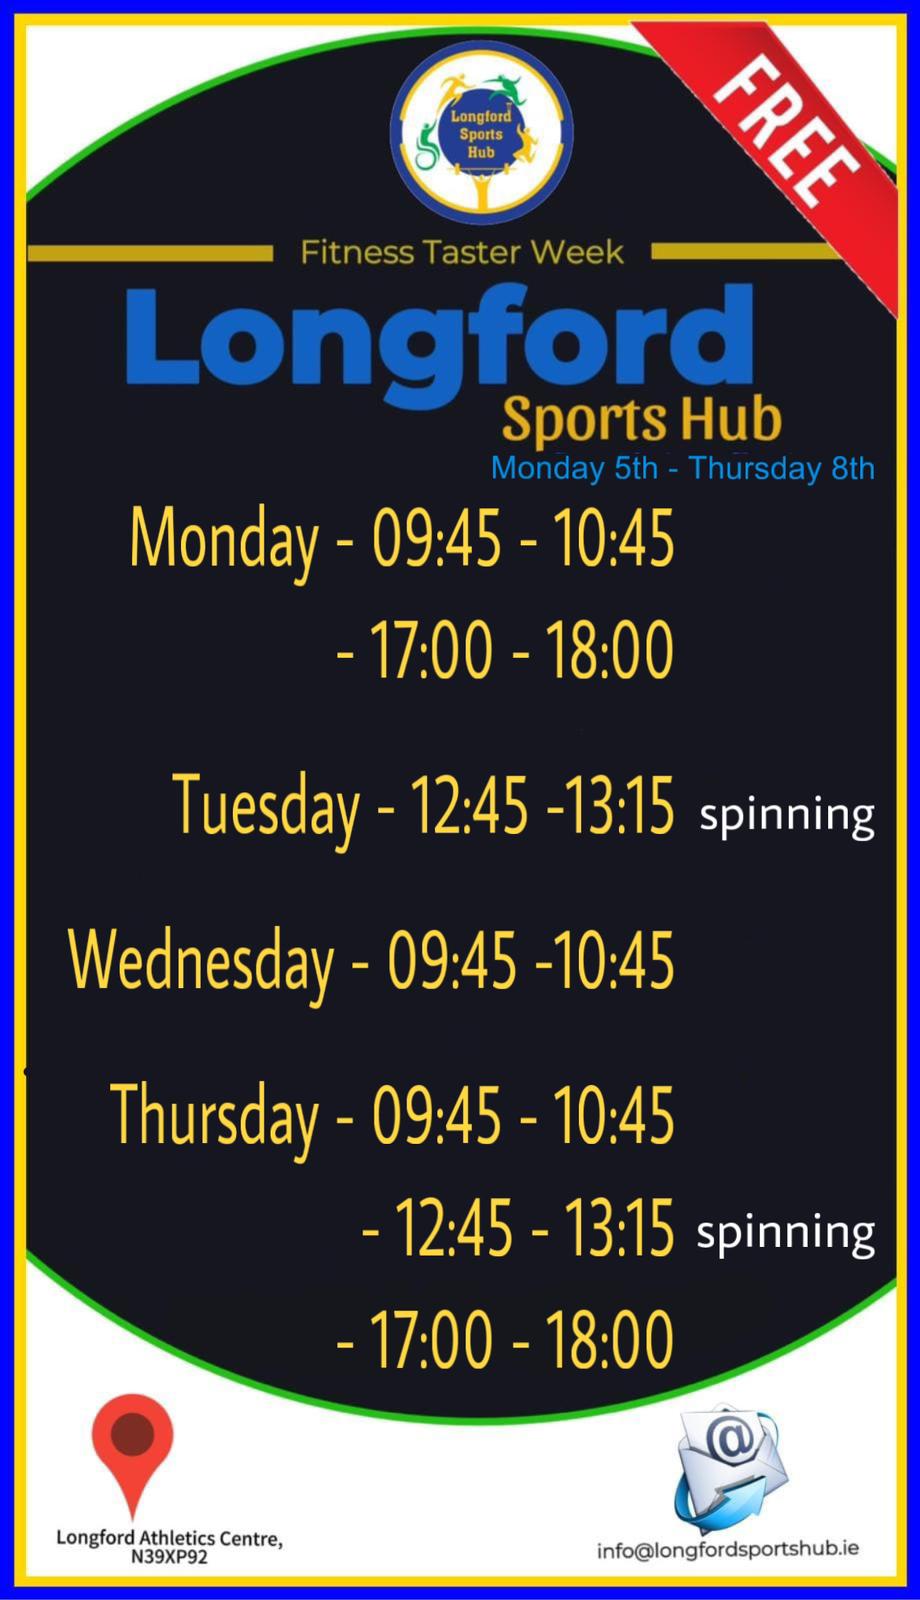 Longford Sports Hub – Free Fitness Taster Week